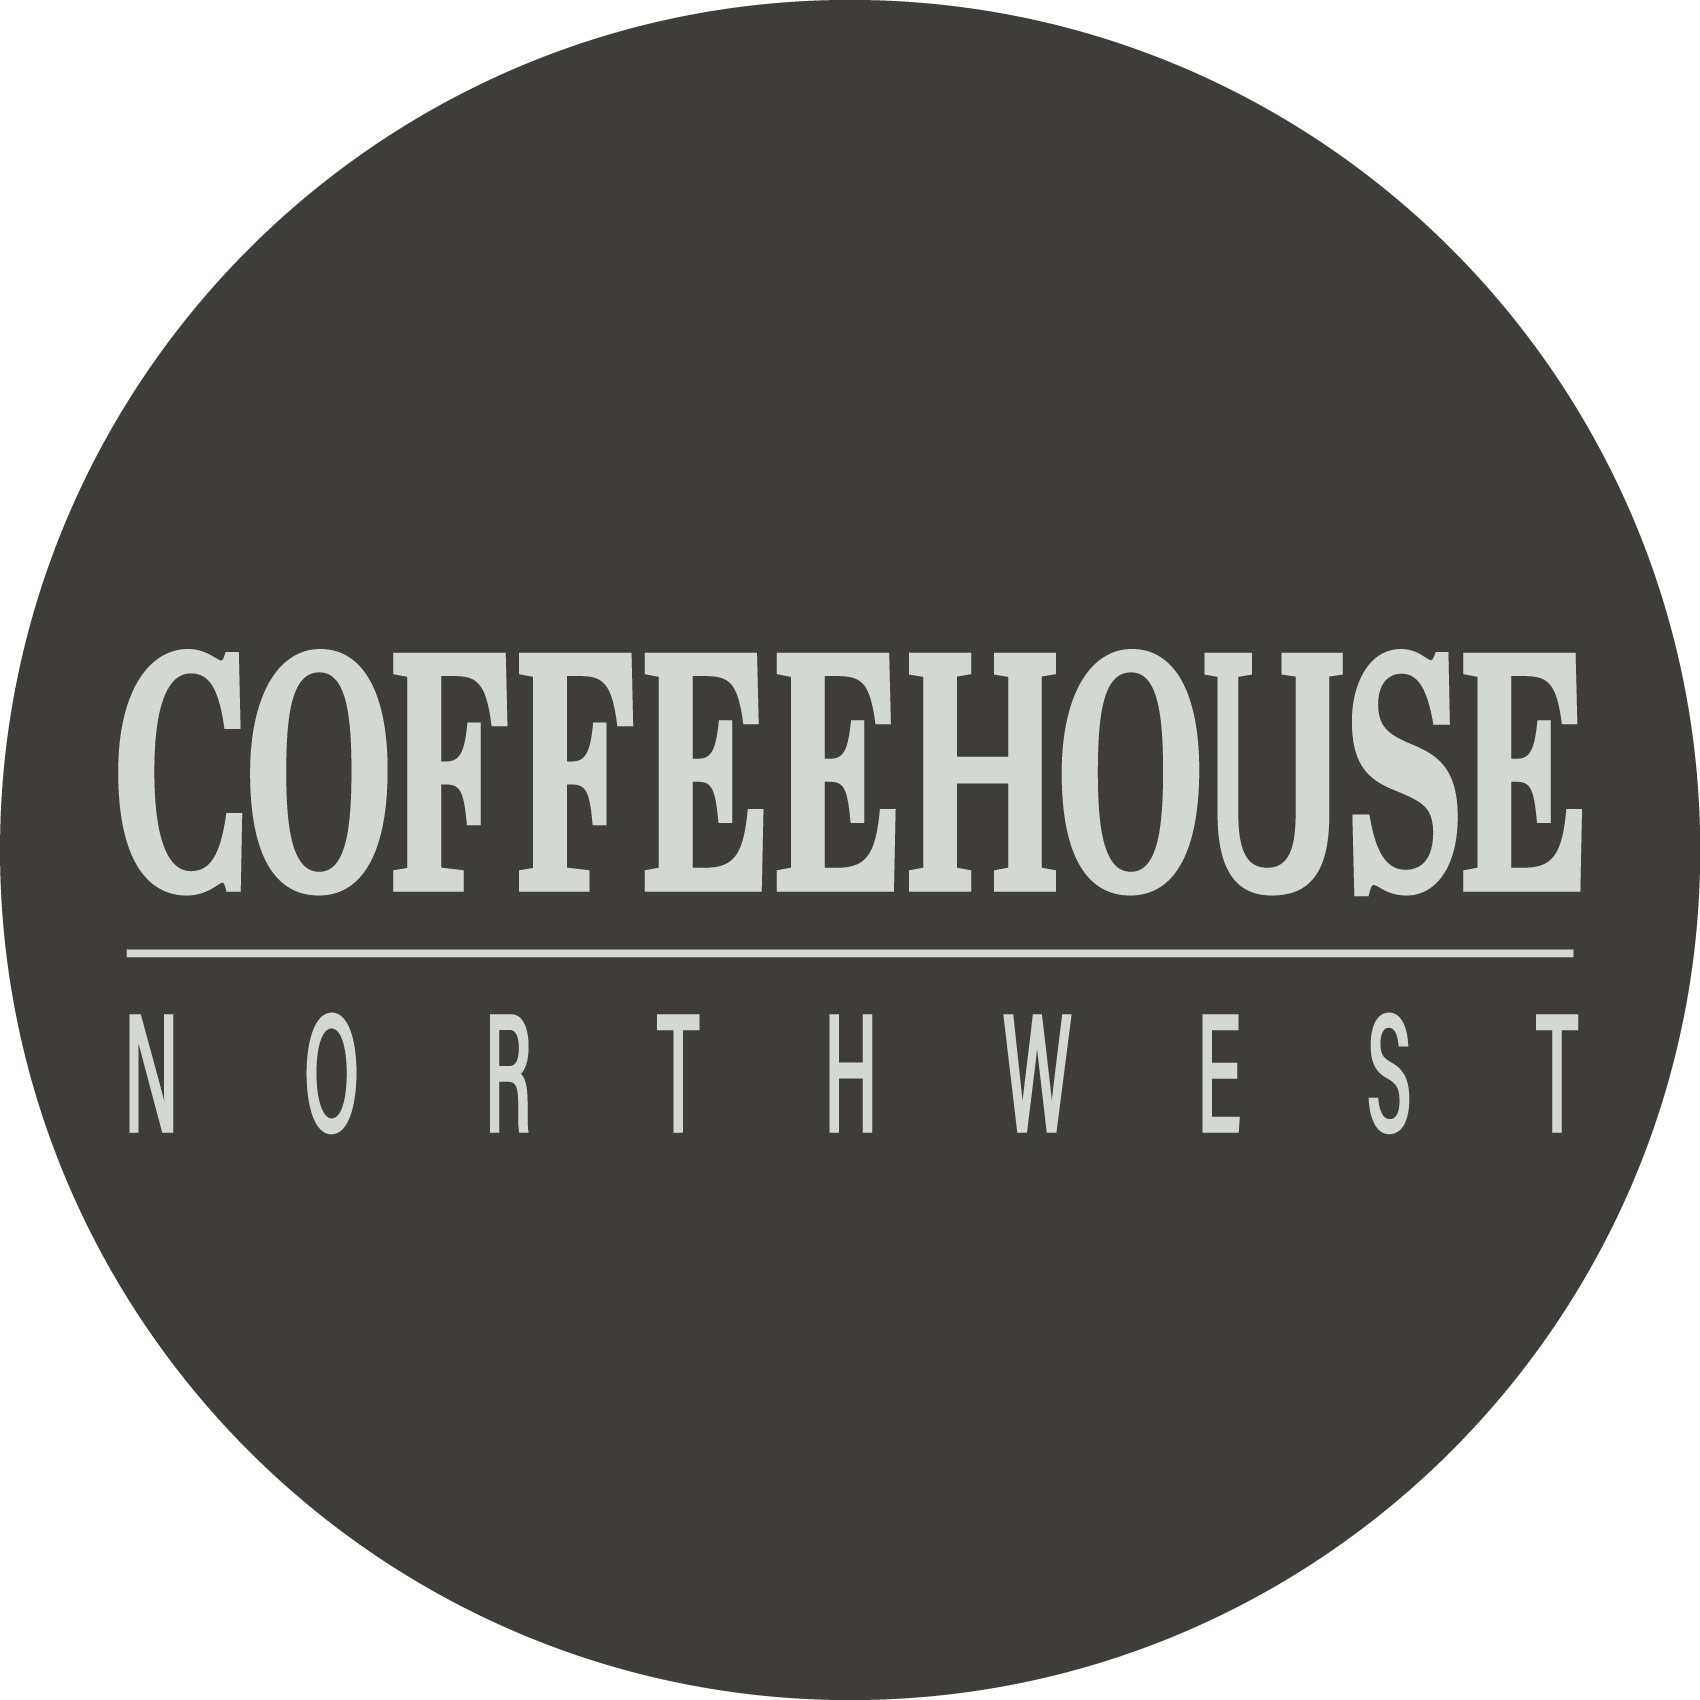 Coffeehouse Northwest Photo